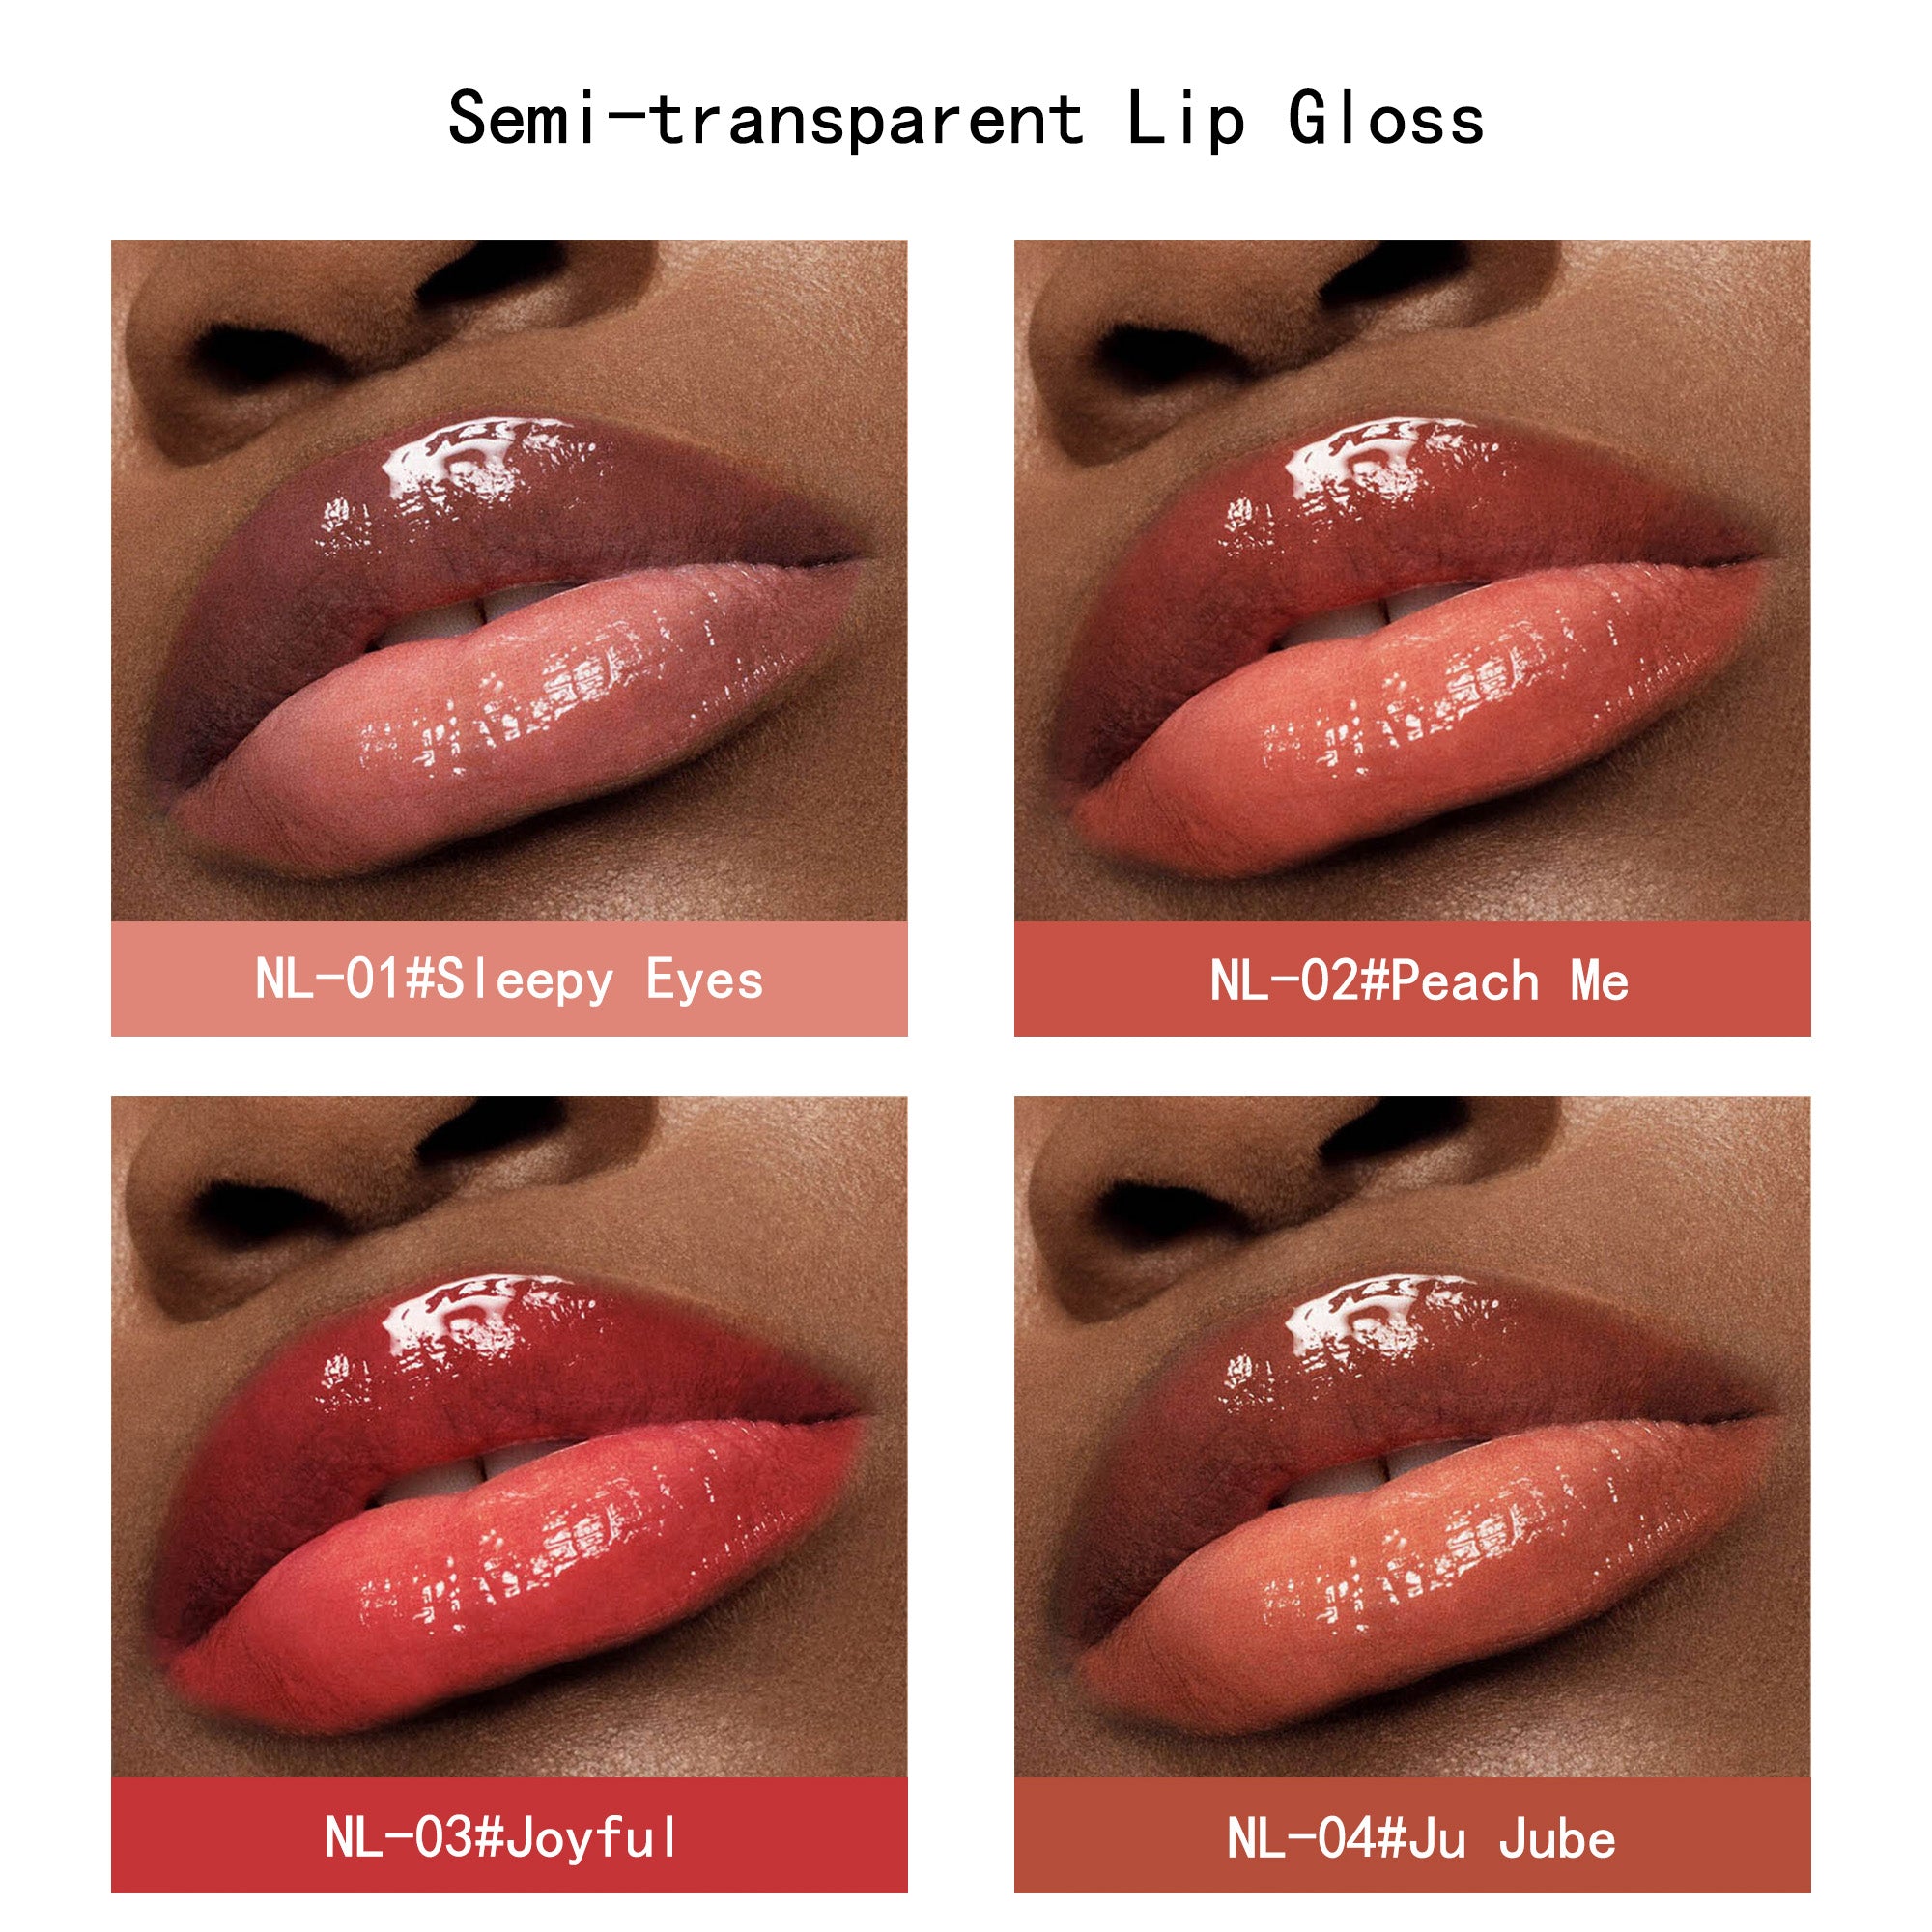 Halb transparenter Lippen glanz